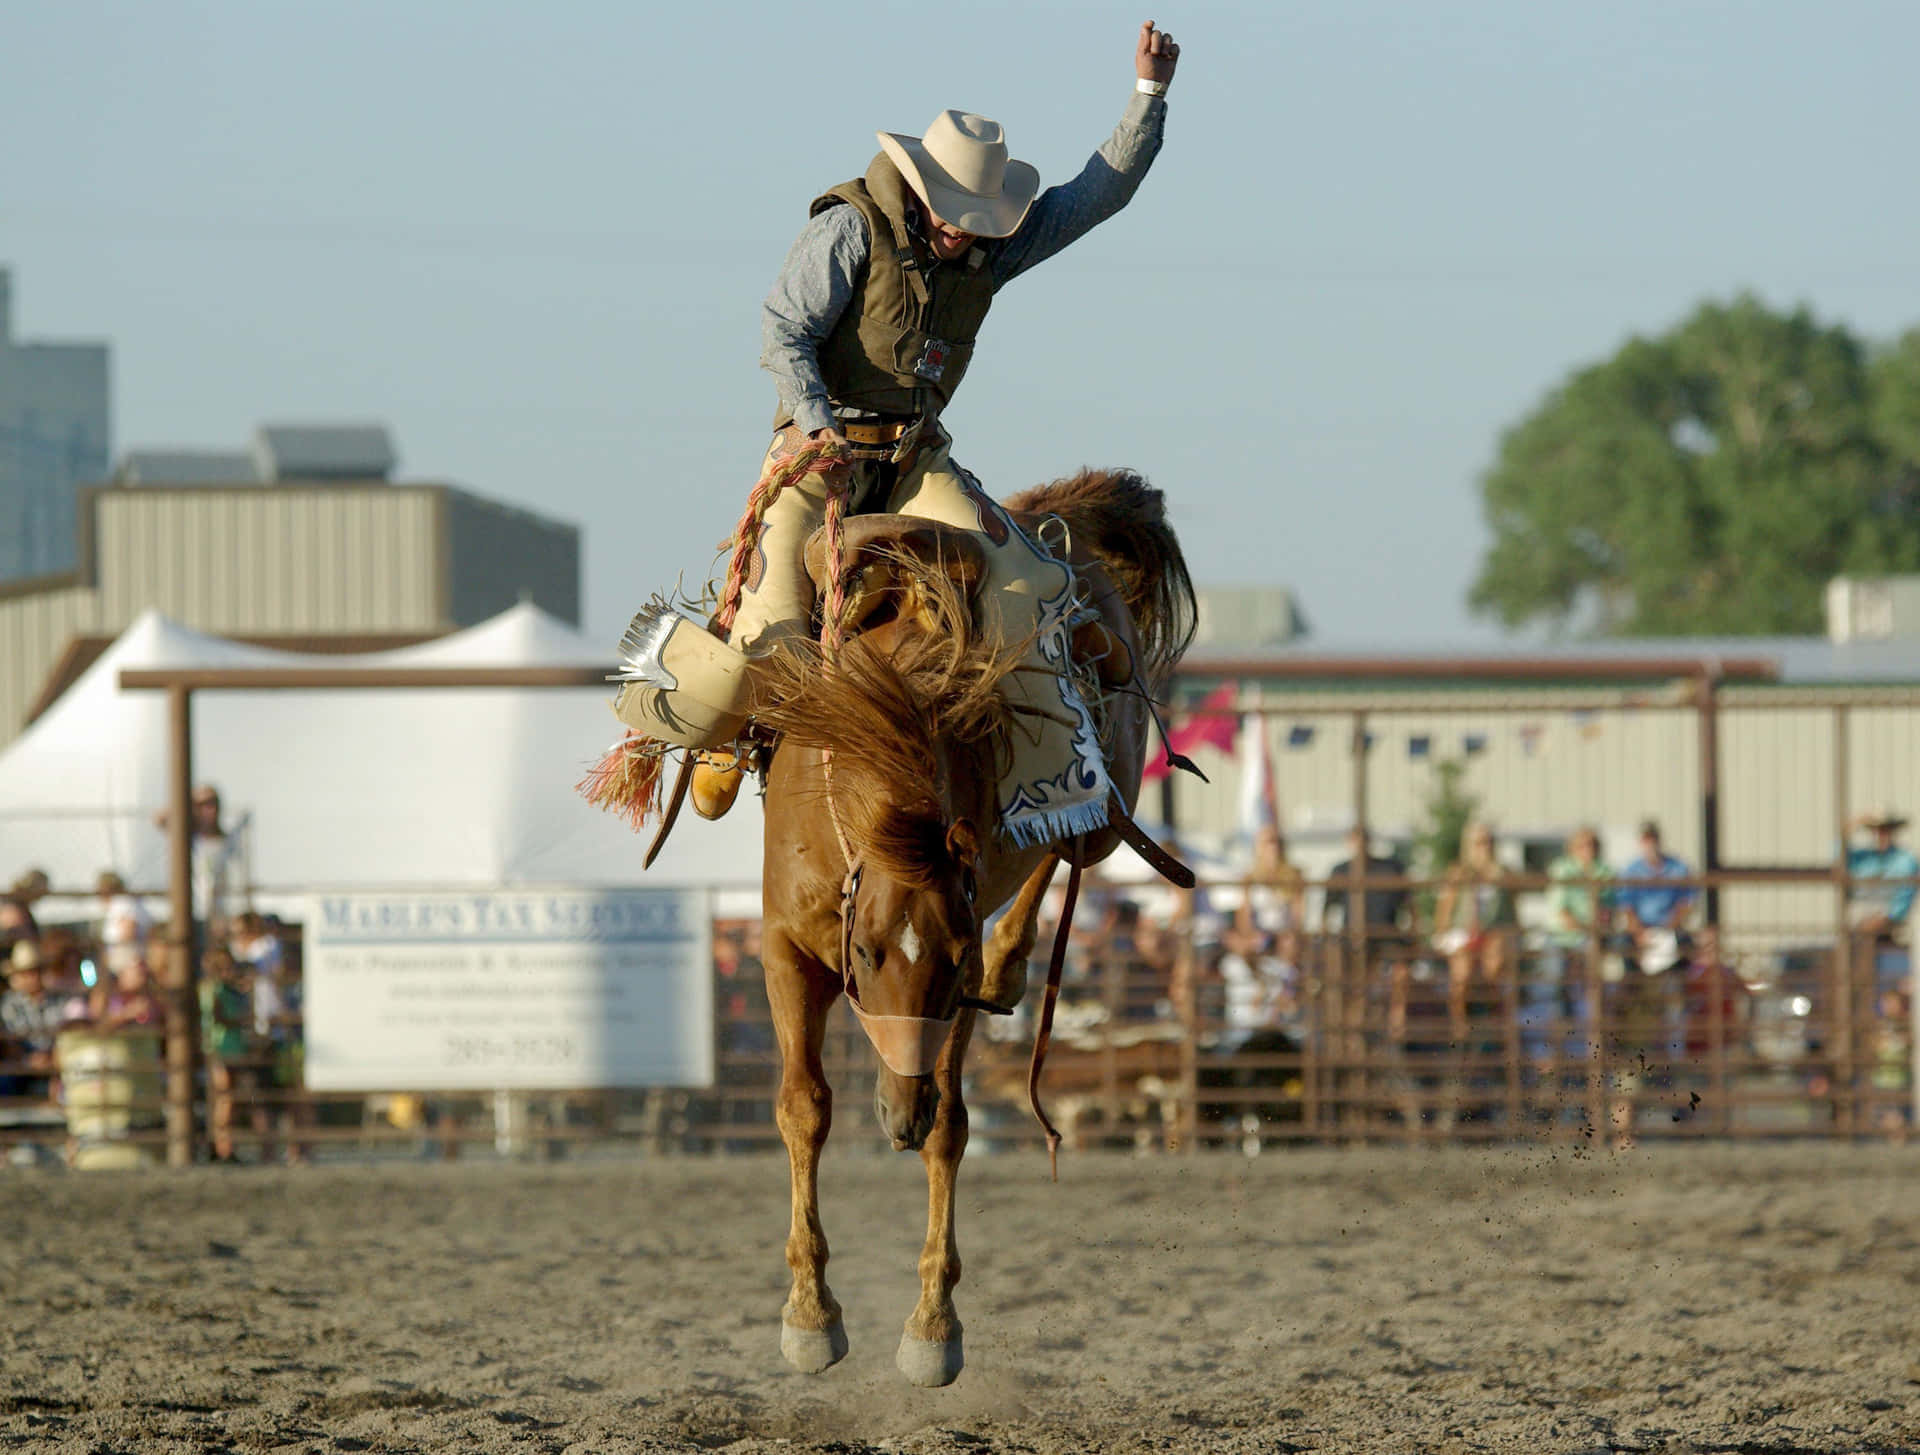 Rodeo Cowboy Riding a Wild Horse